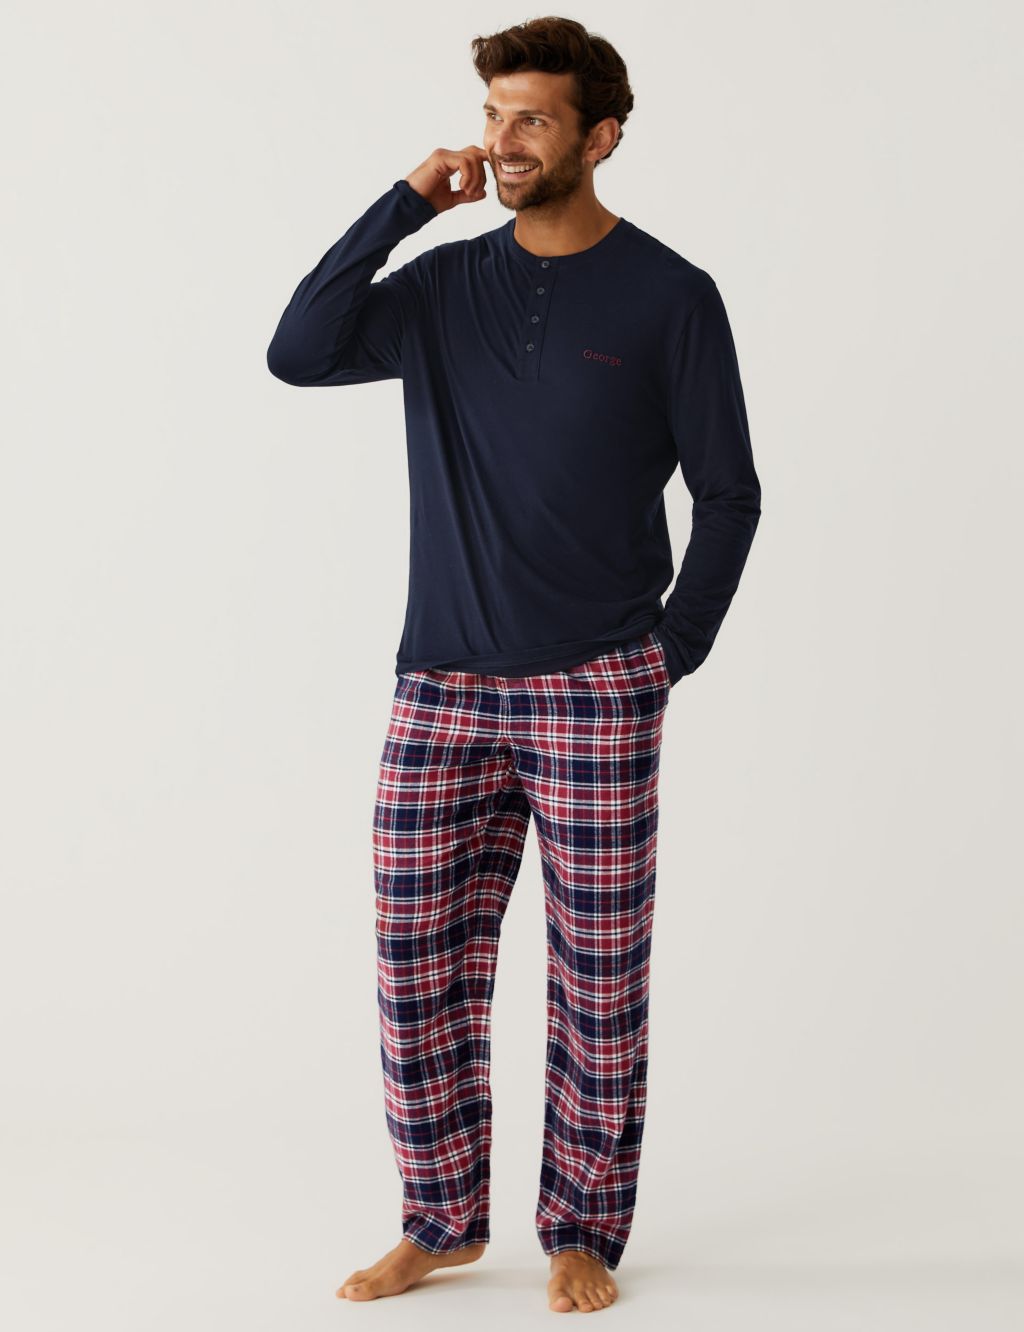 Personalised Men's Brushed Cotton Pyjama Set image 4